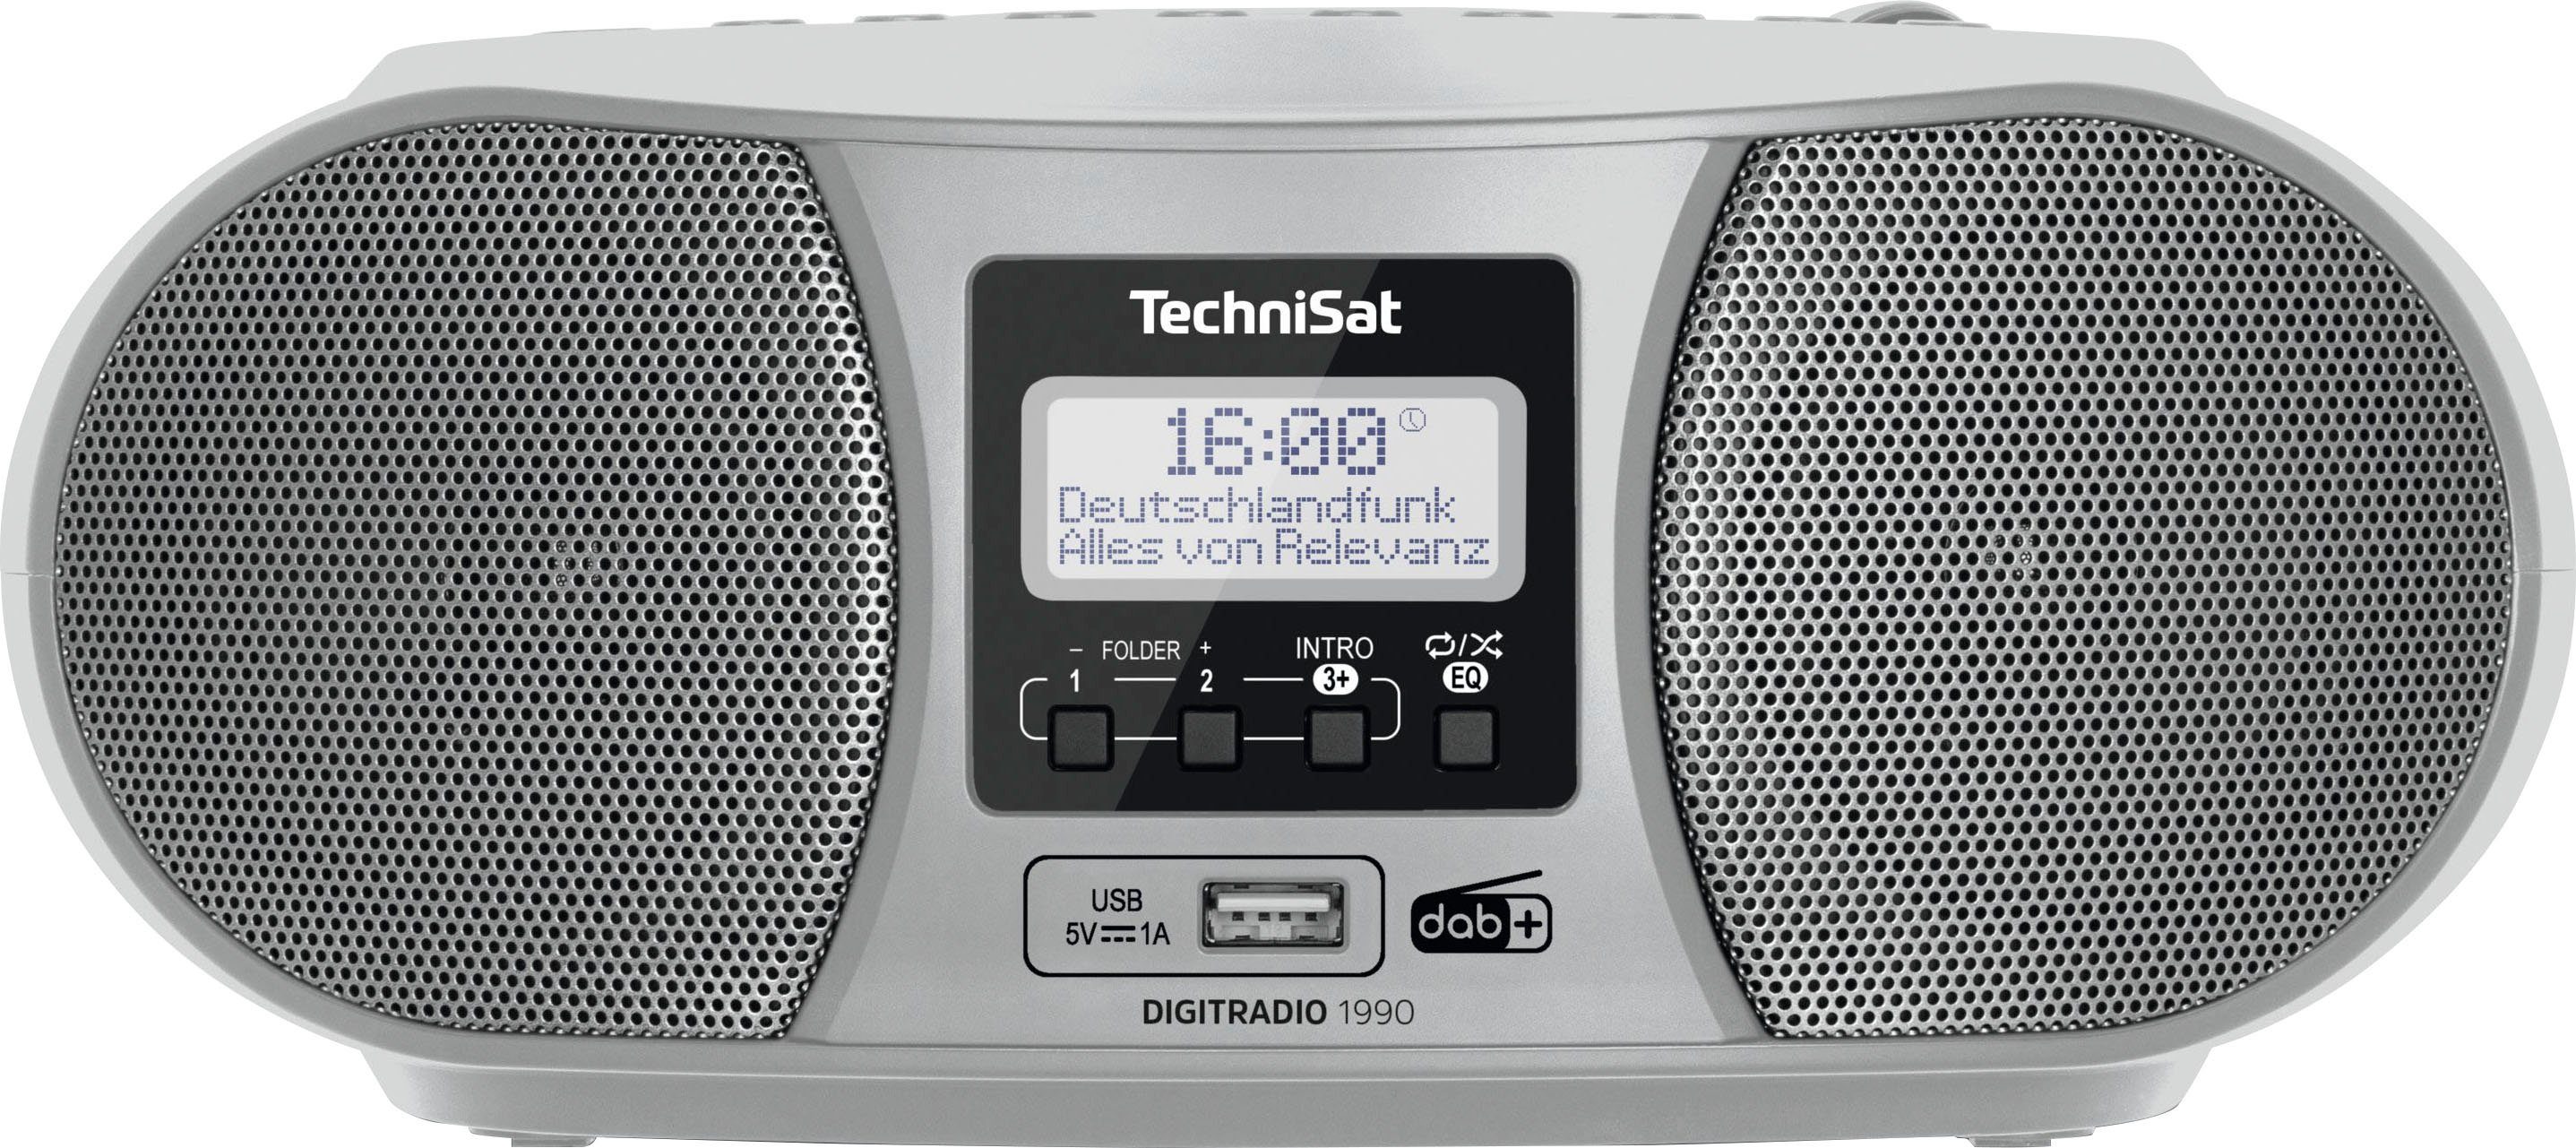 W, CD-Player) Digitalradio 3 1990 silber (DAB), mit (DAB) (Digitalradio DIGITRADIO UKW TechniSat RDS,